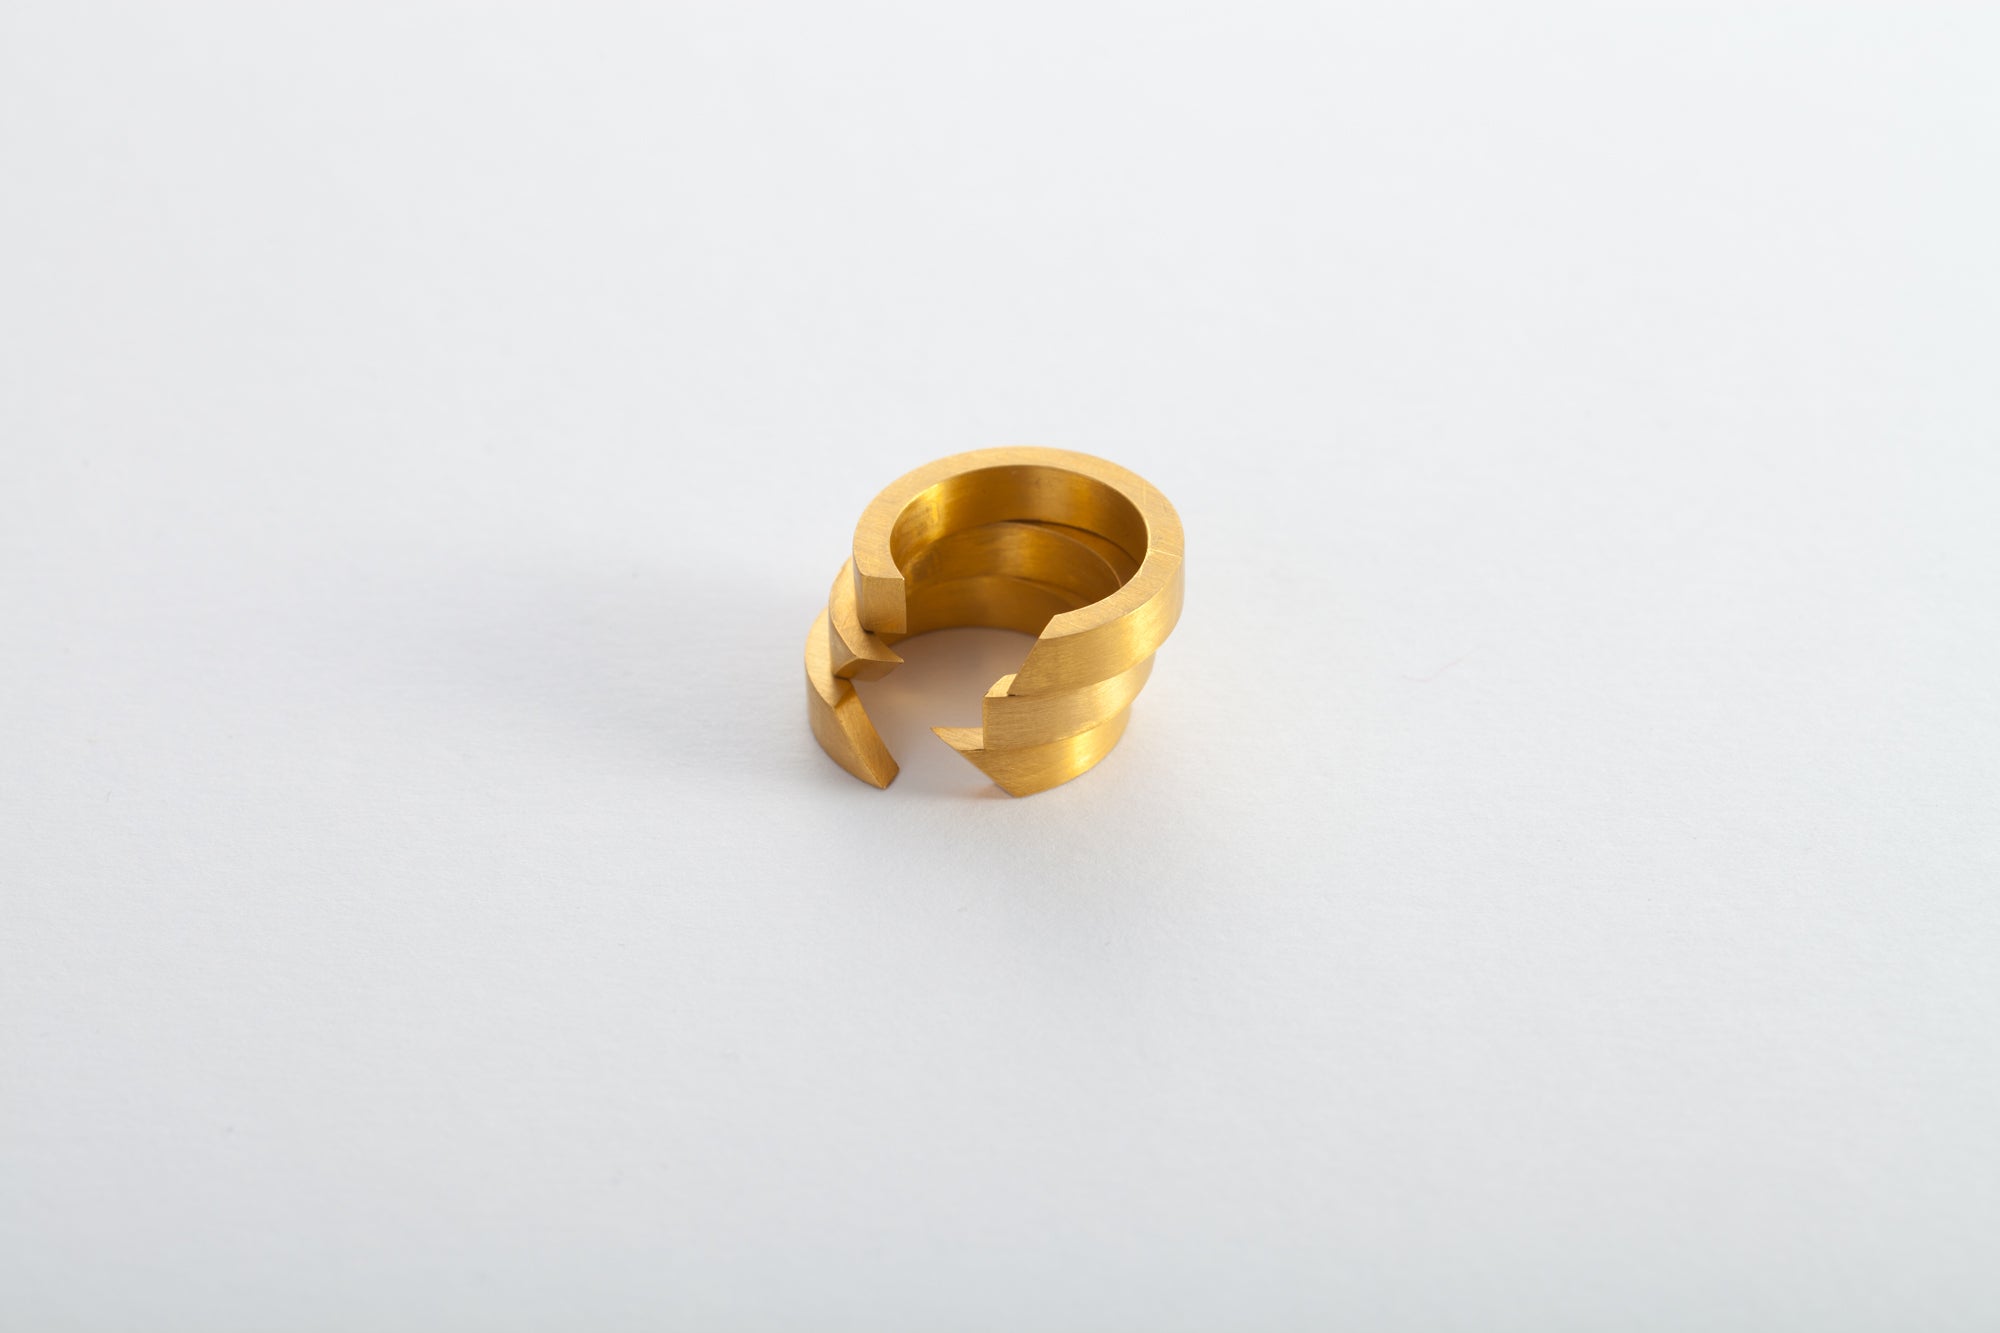 Cracked Open Band Ring,24K Gold - 缺口戒指,24k金 - aurumspeak